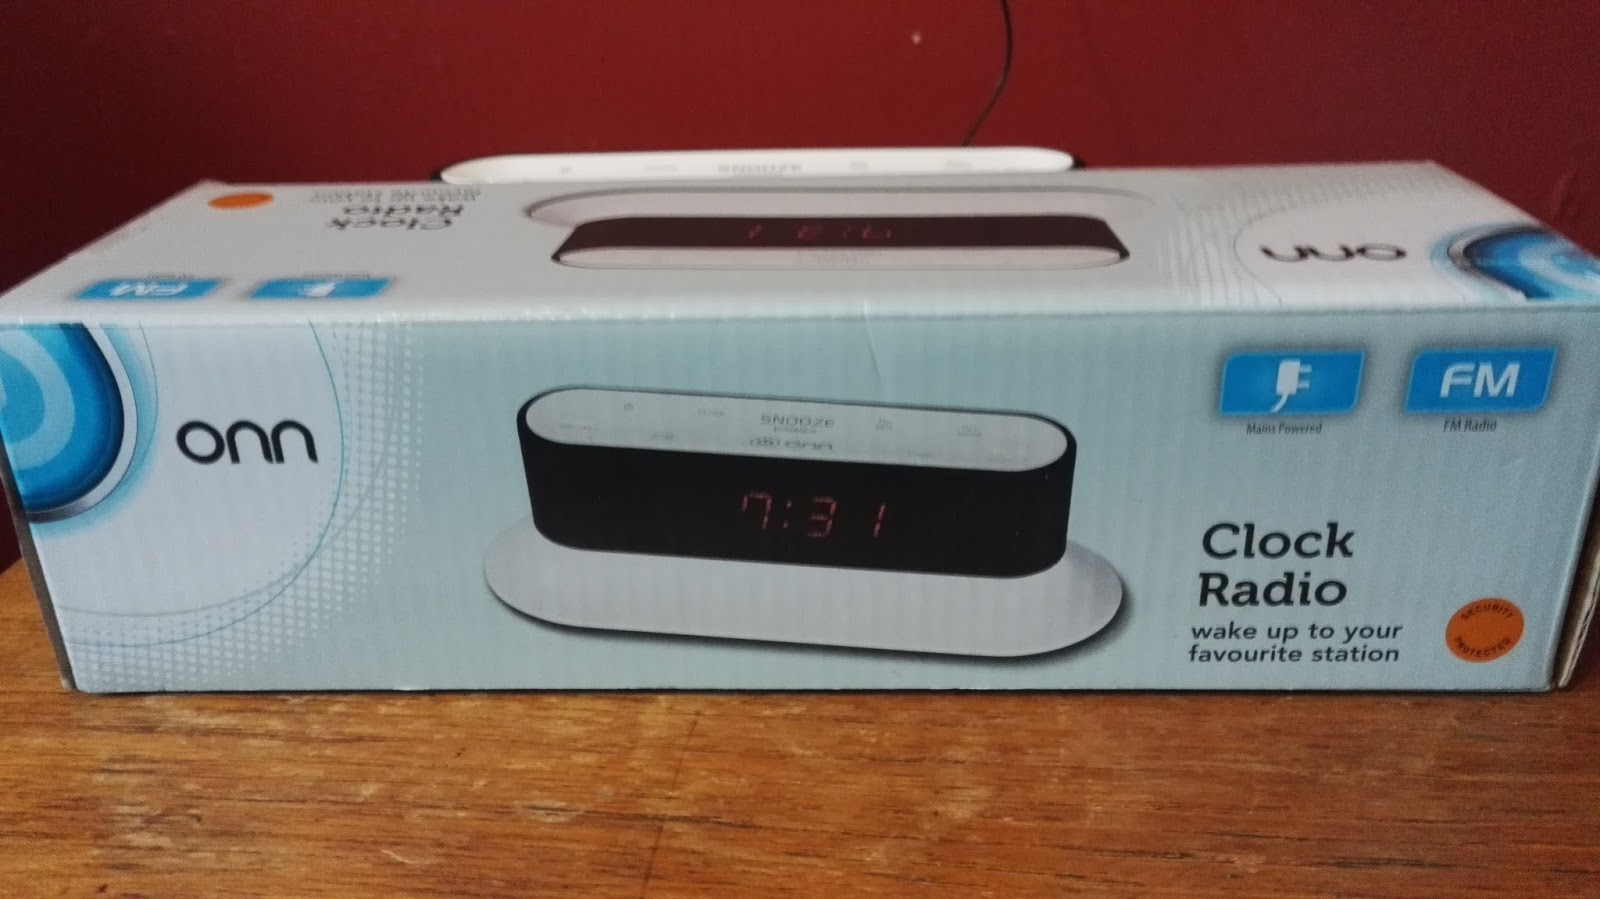 I am homebased: How to set up your Asda Onn clock radio